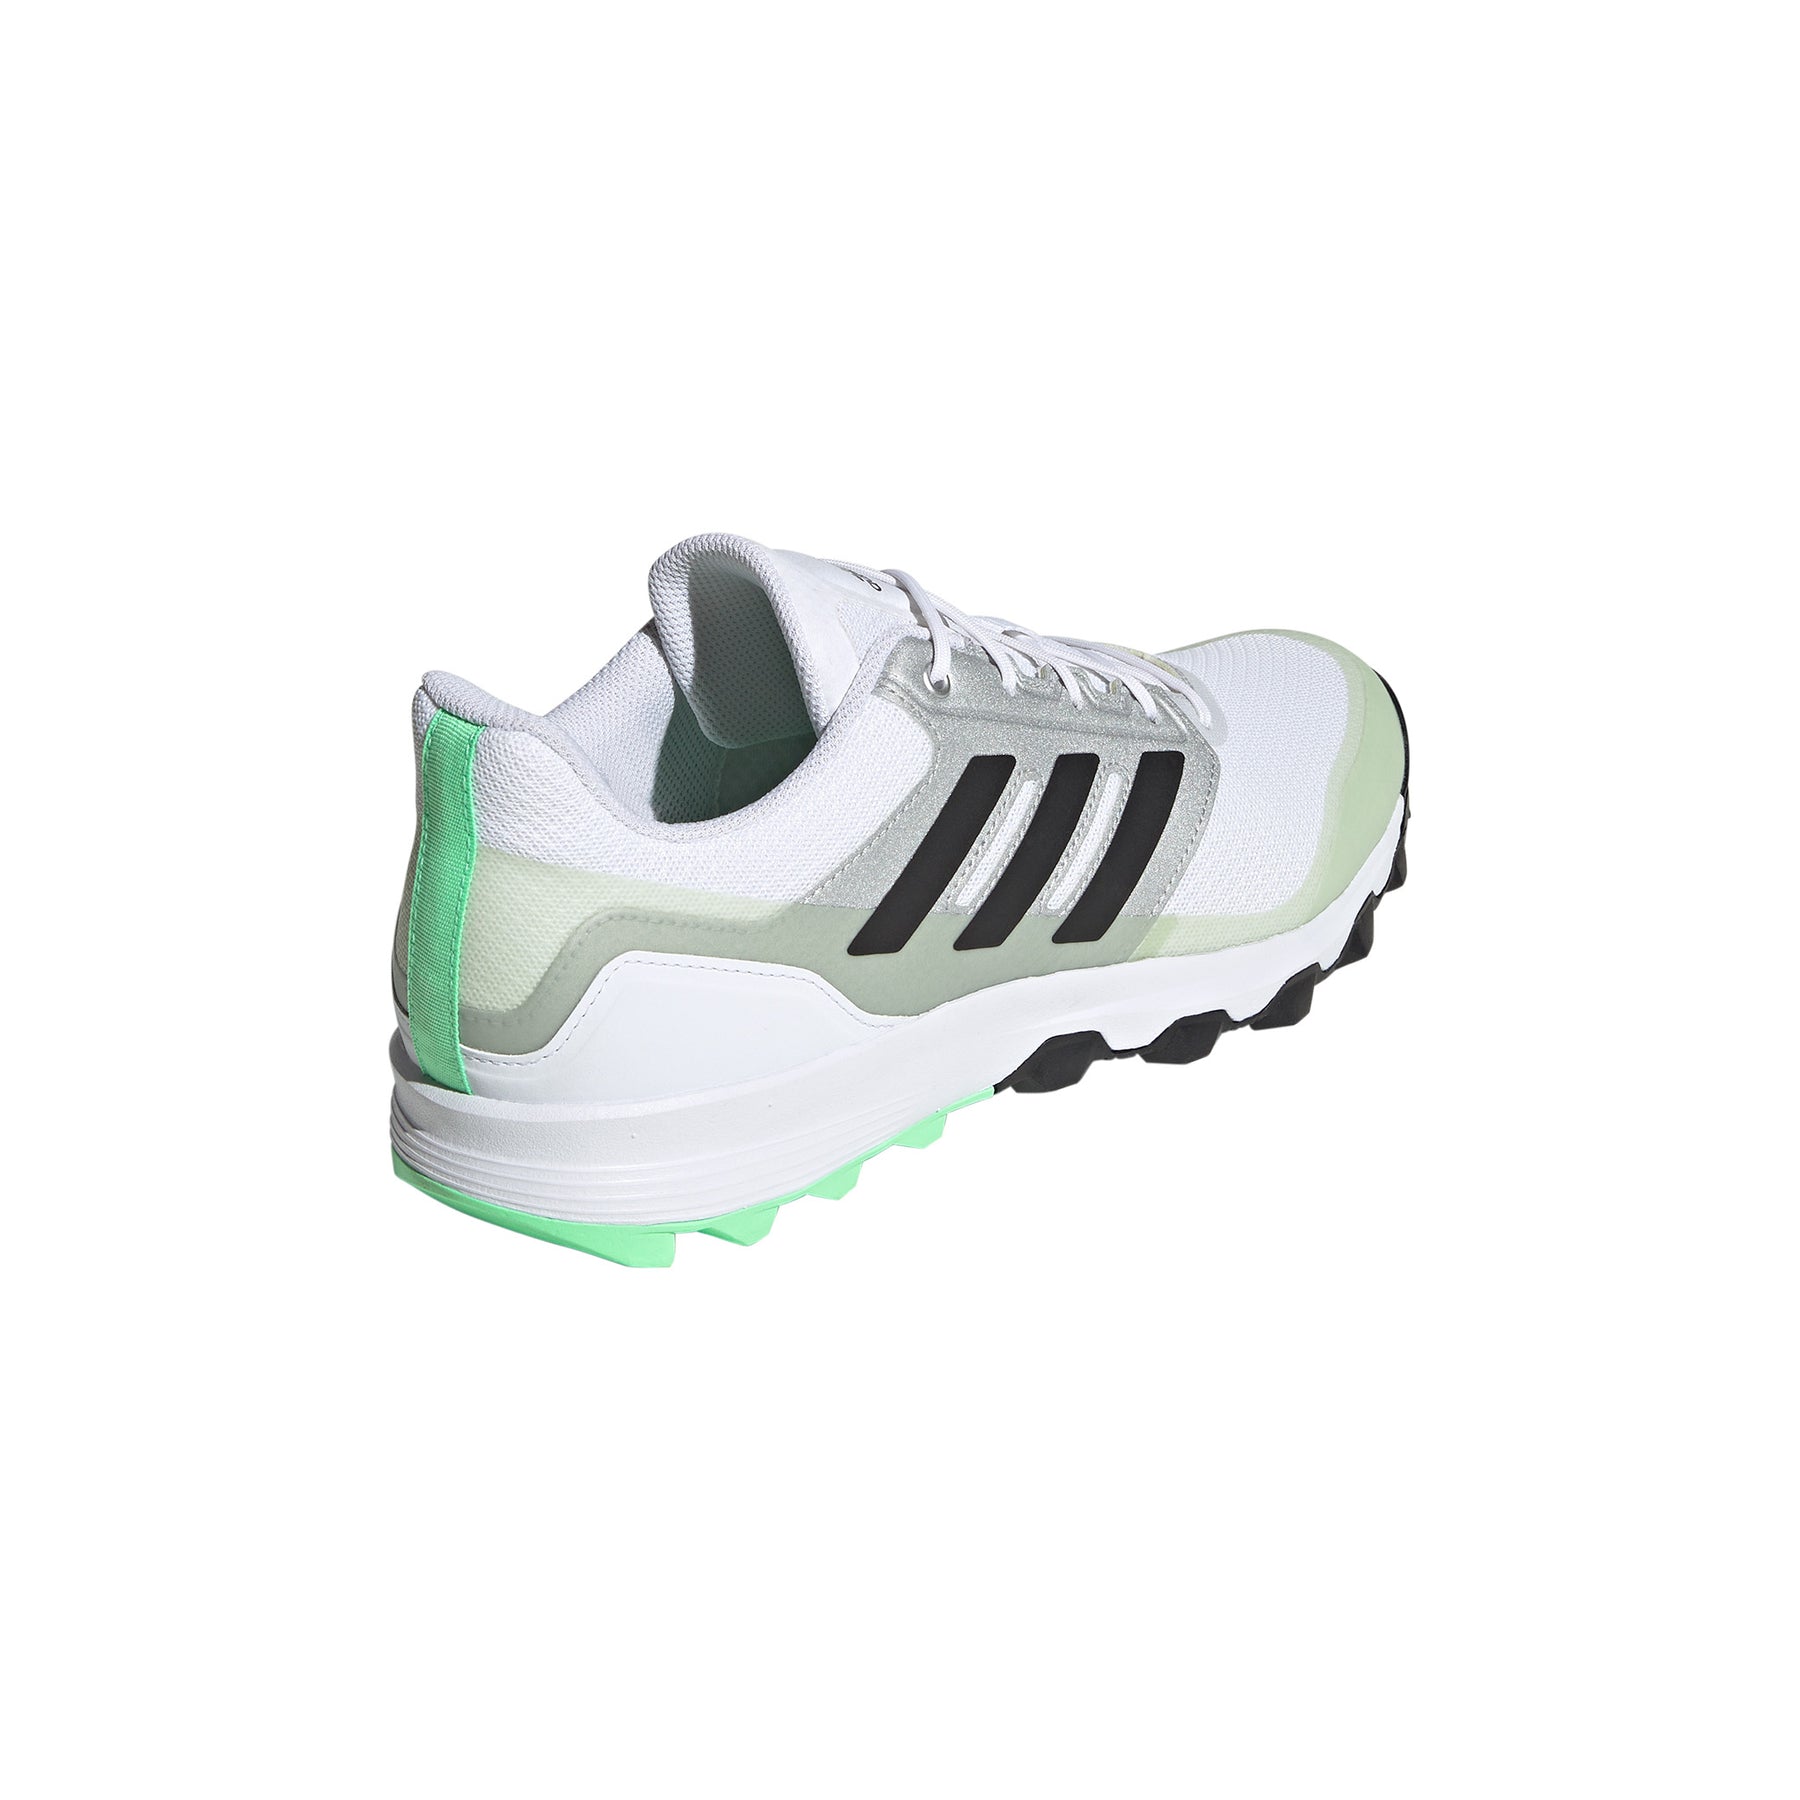 Adidas Flexcloud 2.1 Hockey Shoes: White